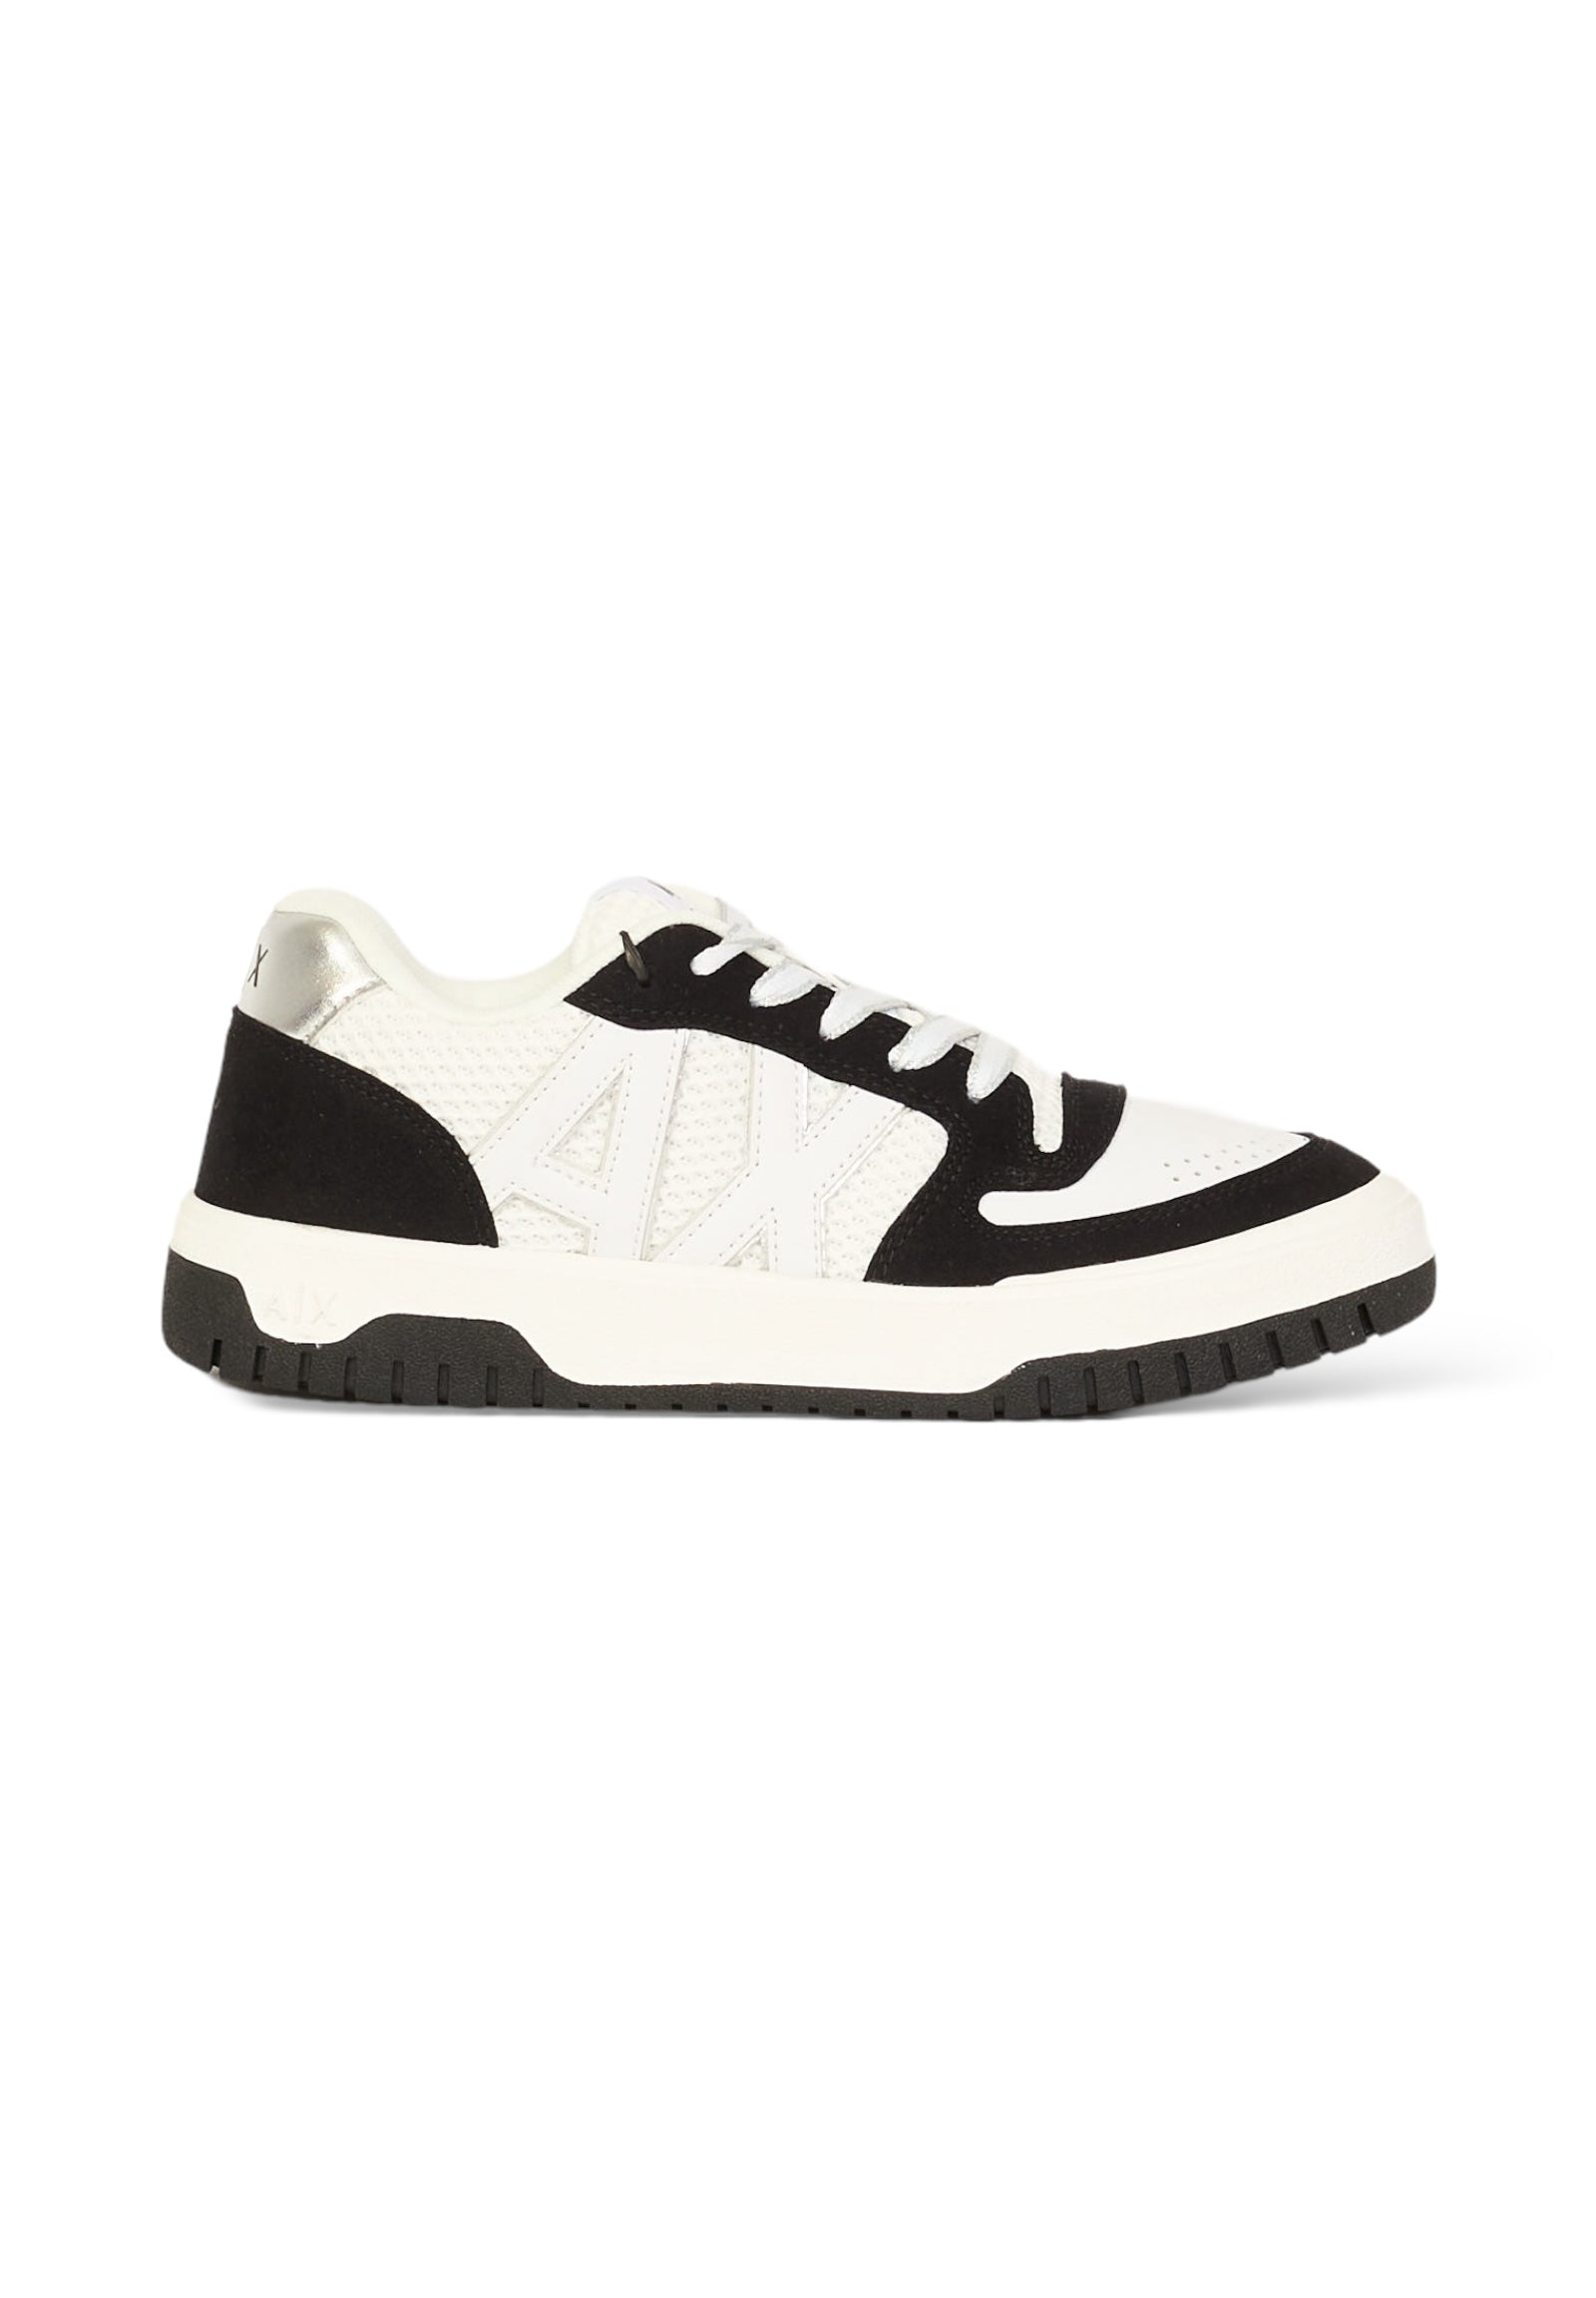 Sneakers Xdx150 Optic WhitE-BlacK-Silver